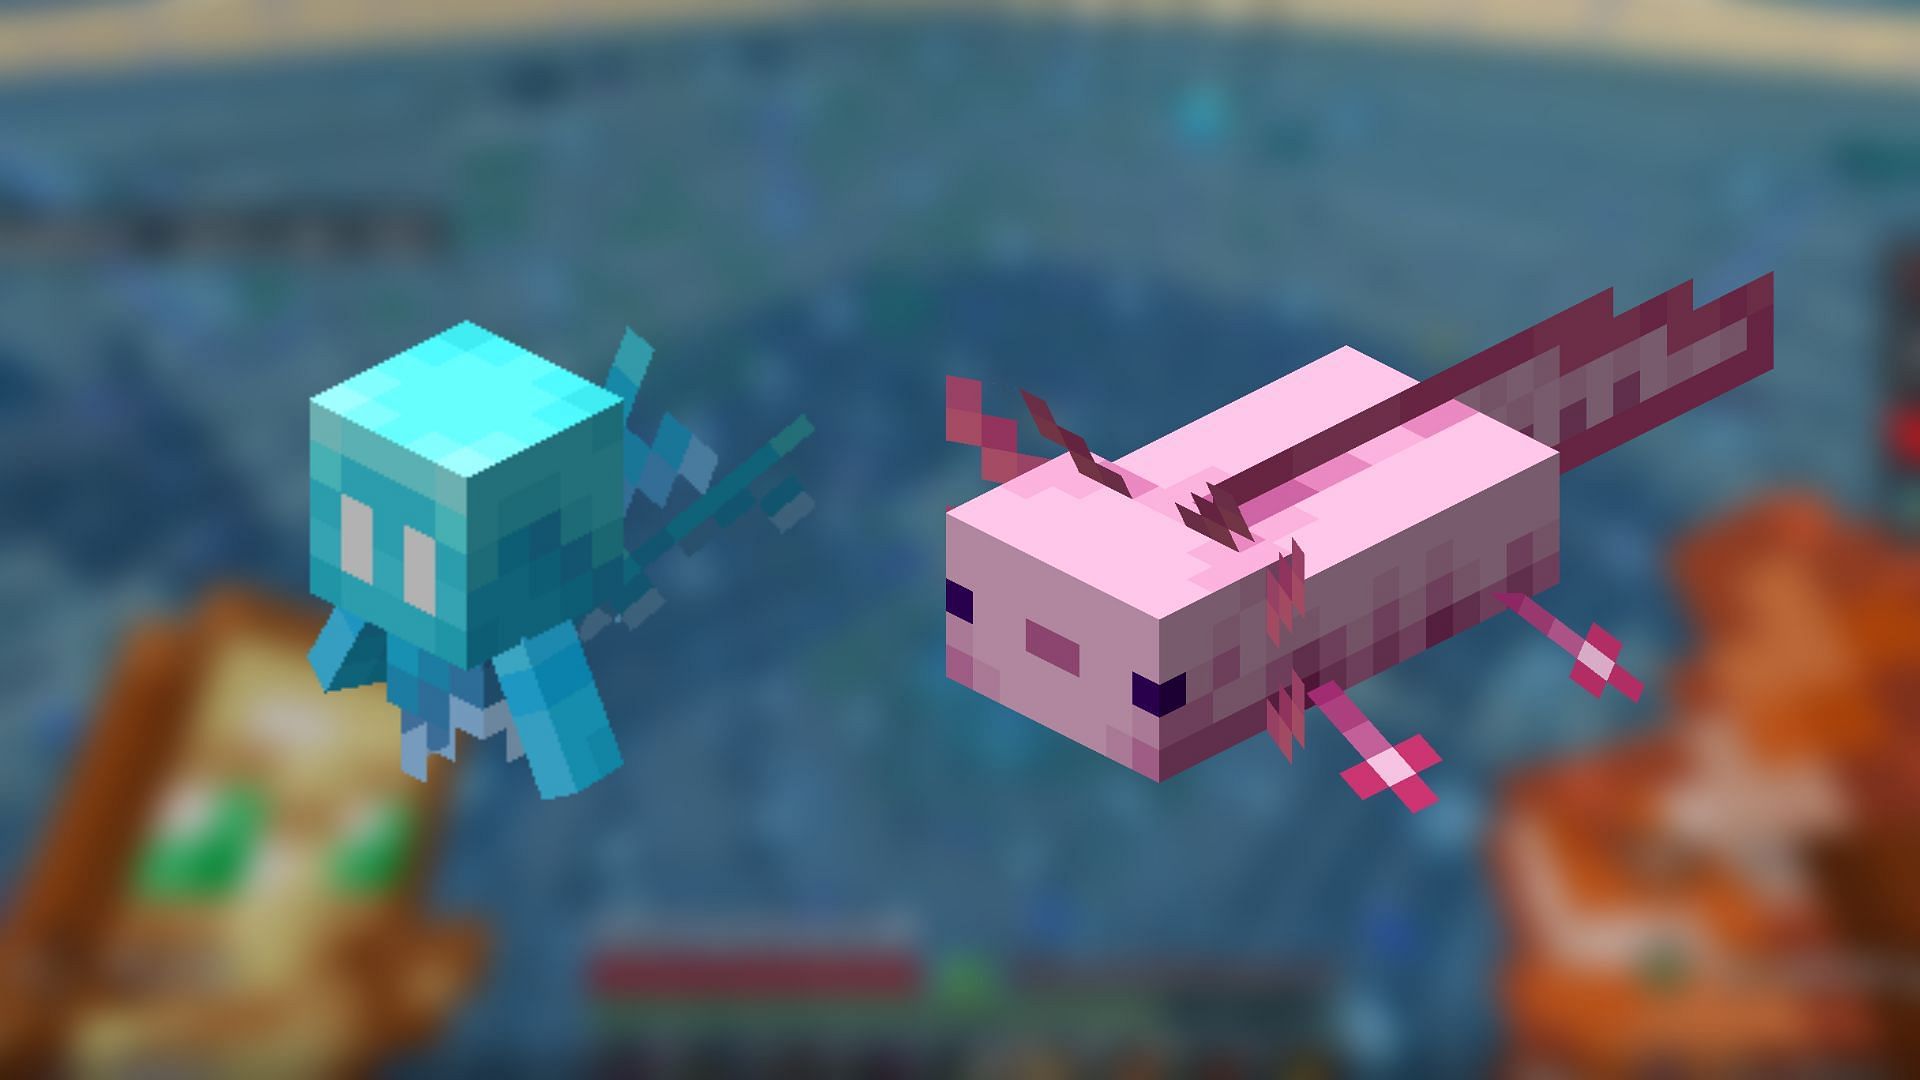 A Minecraft player recently shared their fish farm design utilizing axolotls and allays.